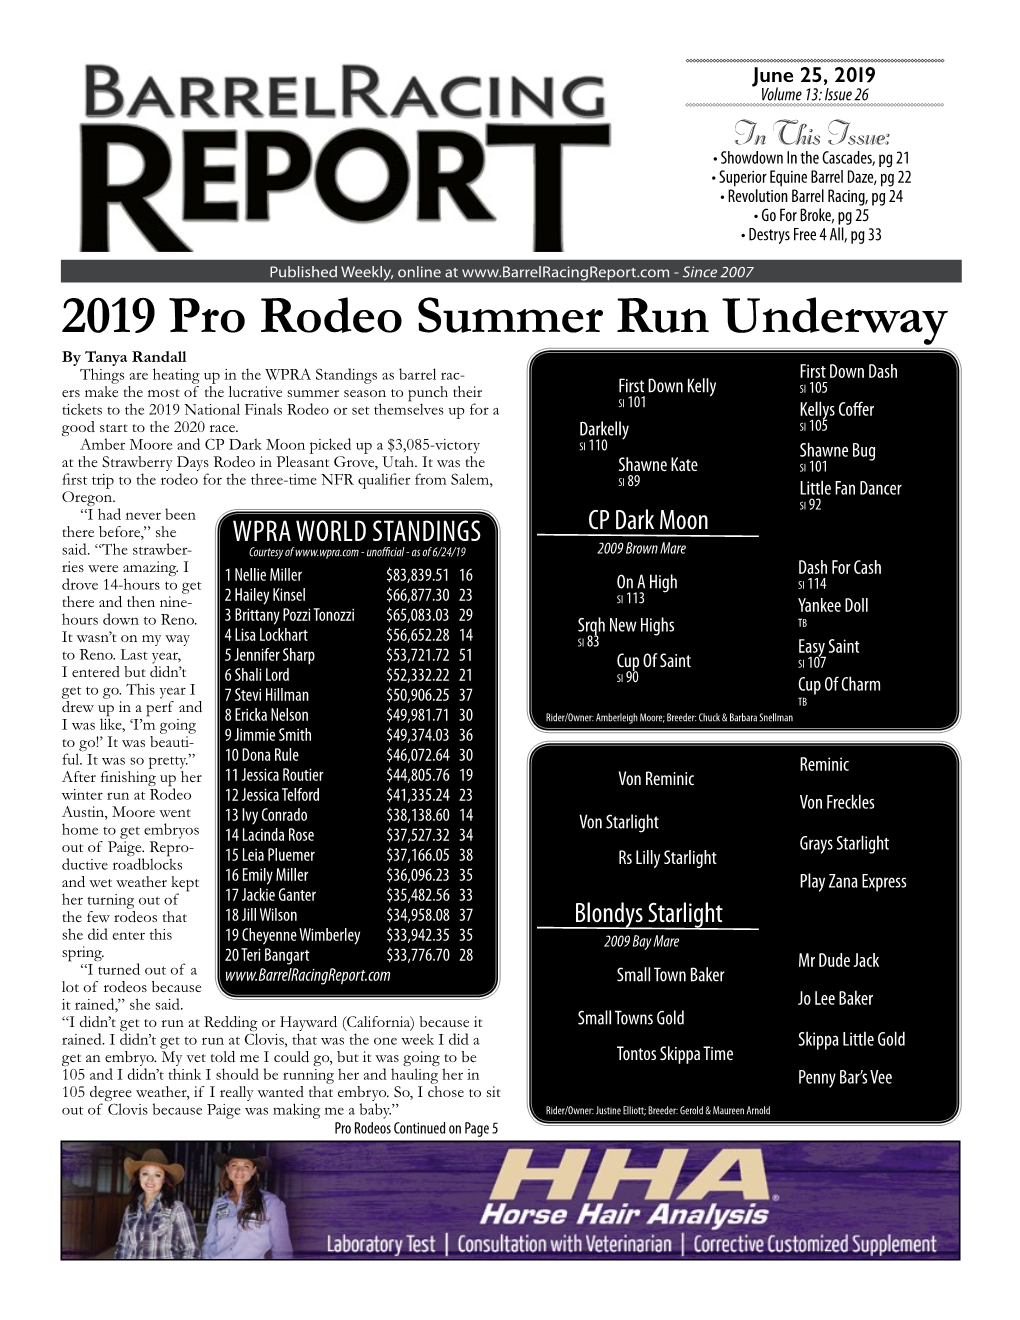 2019 Pro Rodeo Summer Run Underway